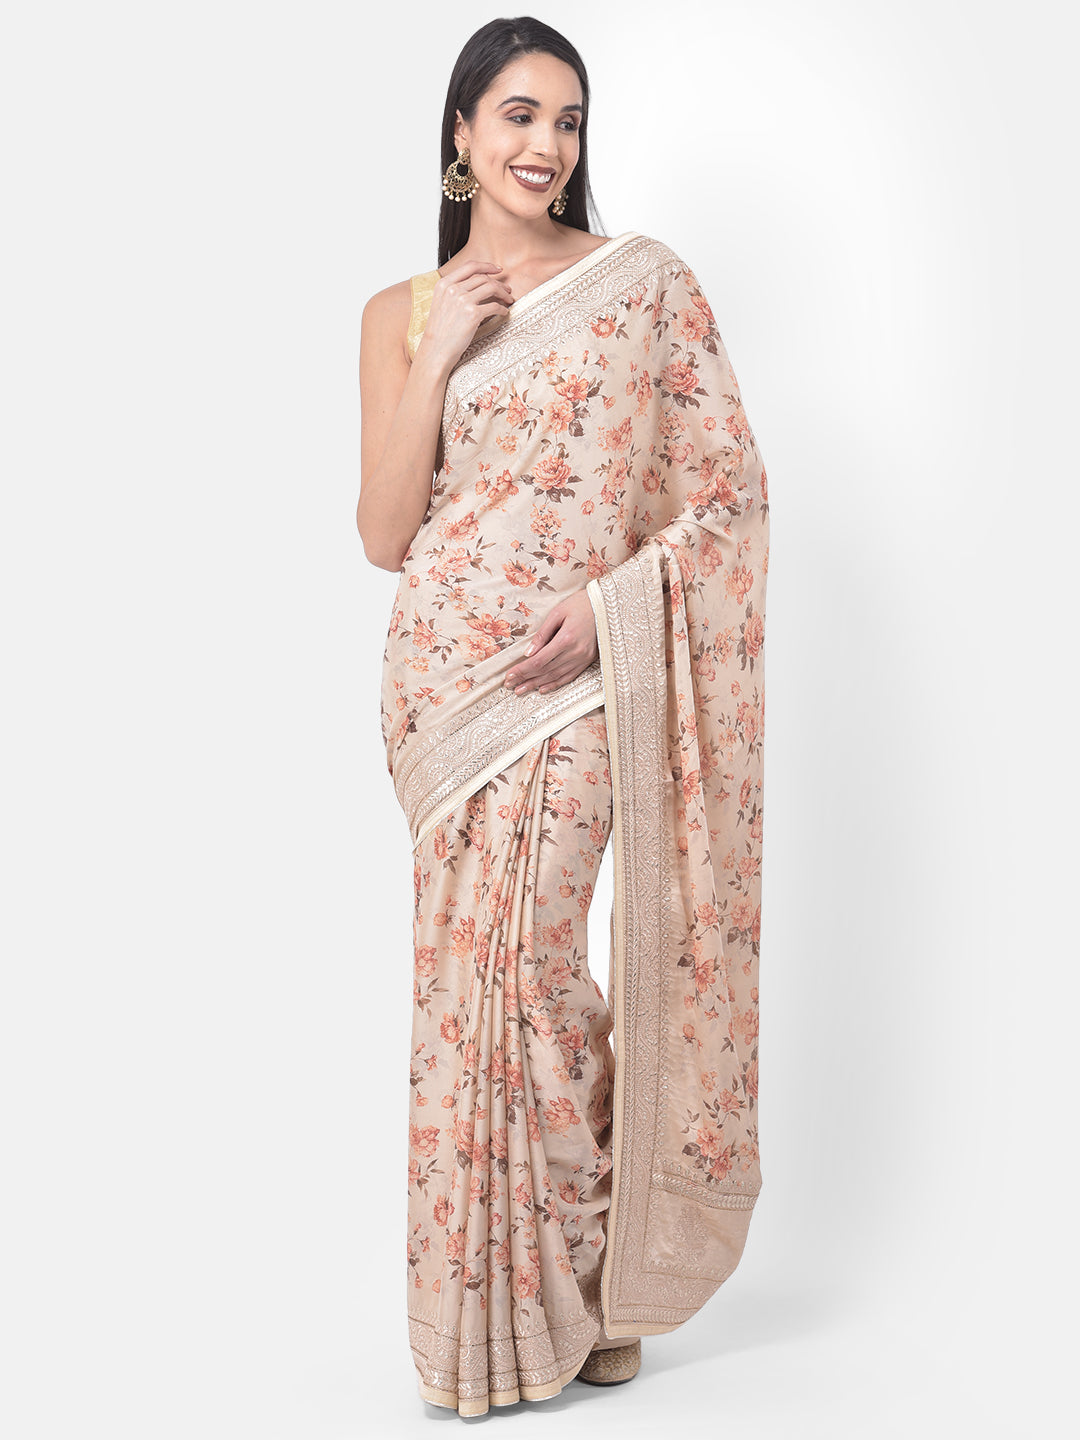 Neeru's Beige Color Crepe Fabric Saree